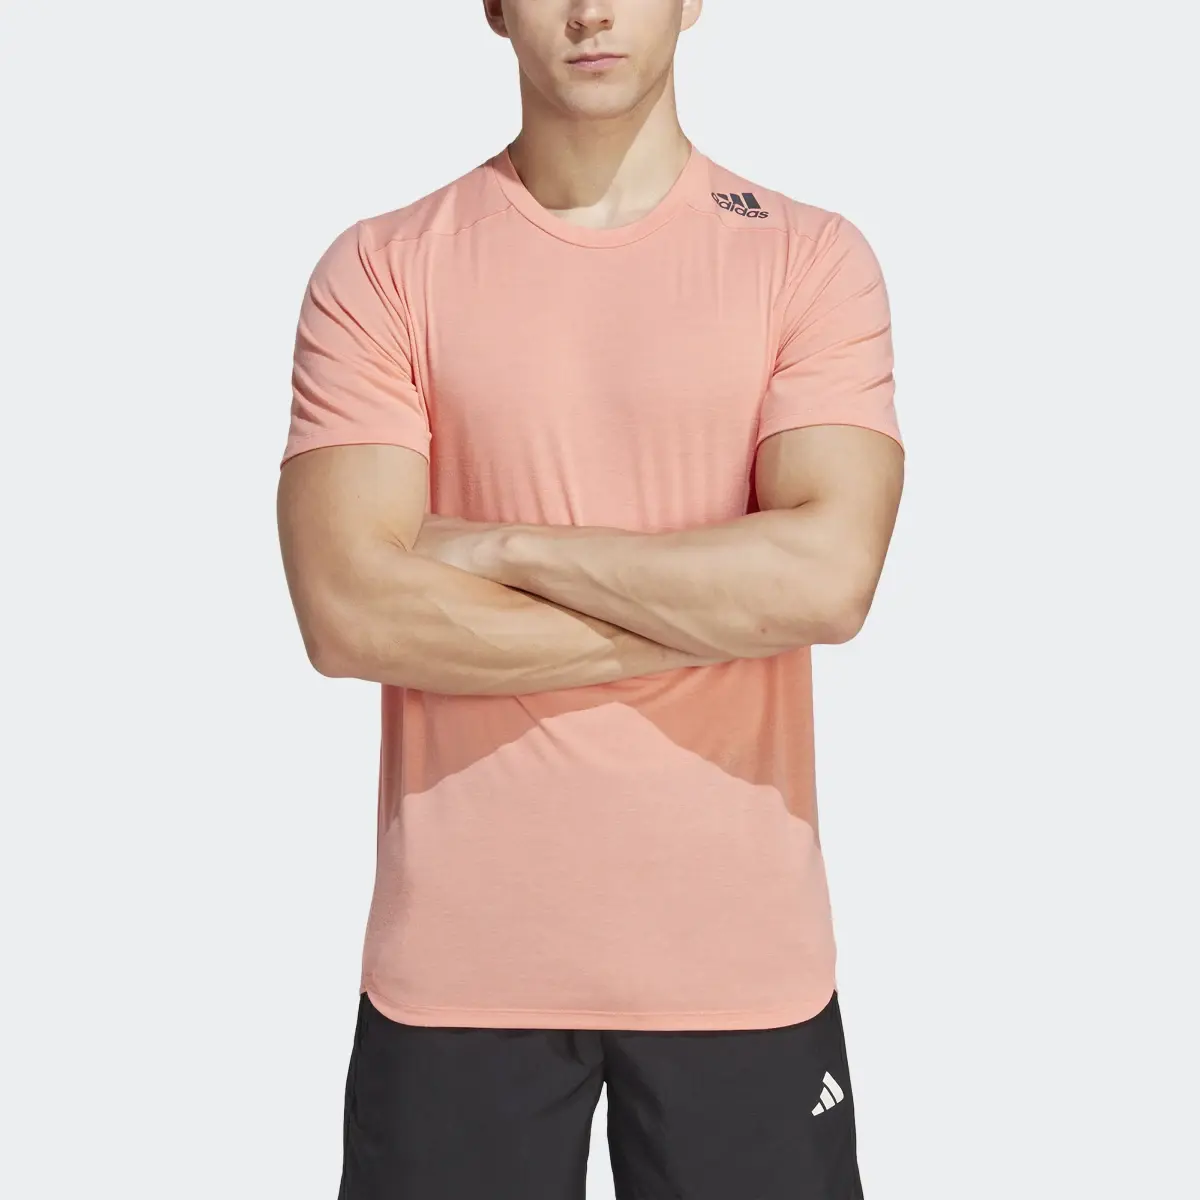 Adidas T-shirt Designed for Training. 1